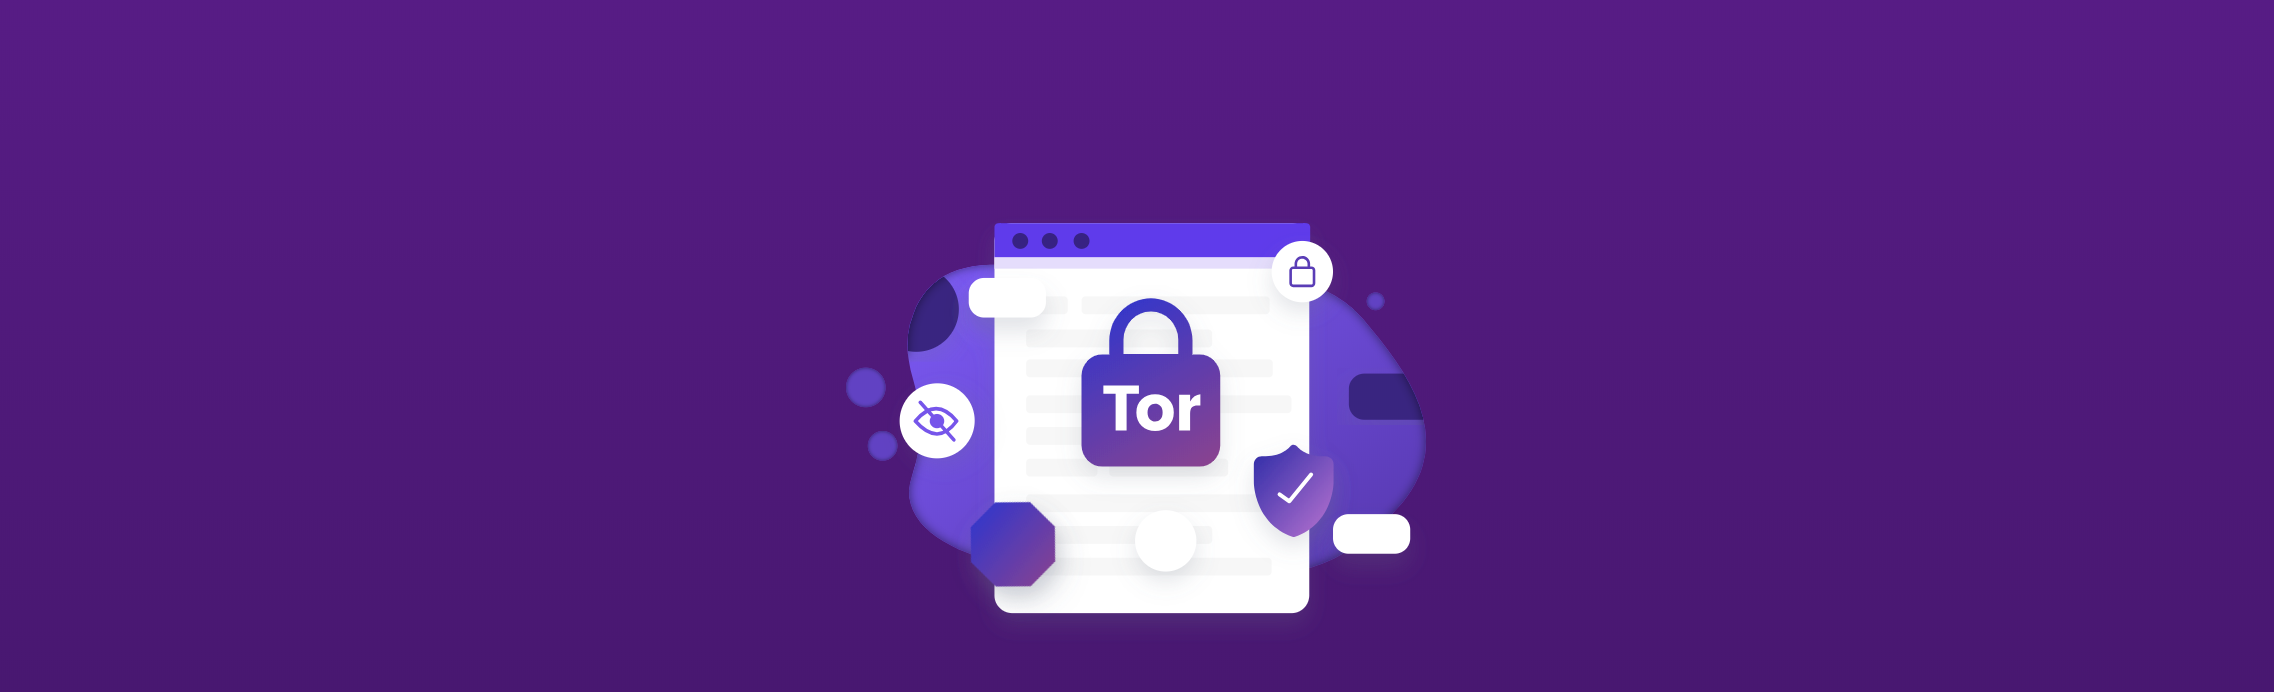 Tor browser secure hyrda перенести закладки в тор браузер